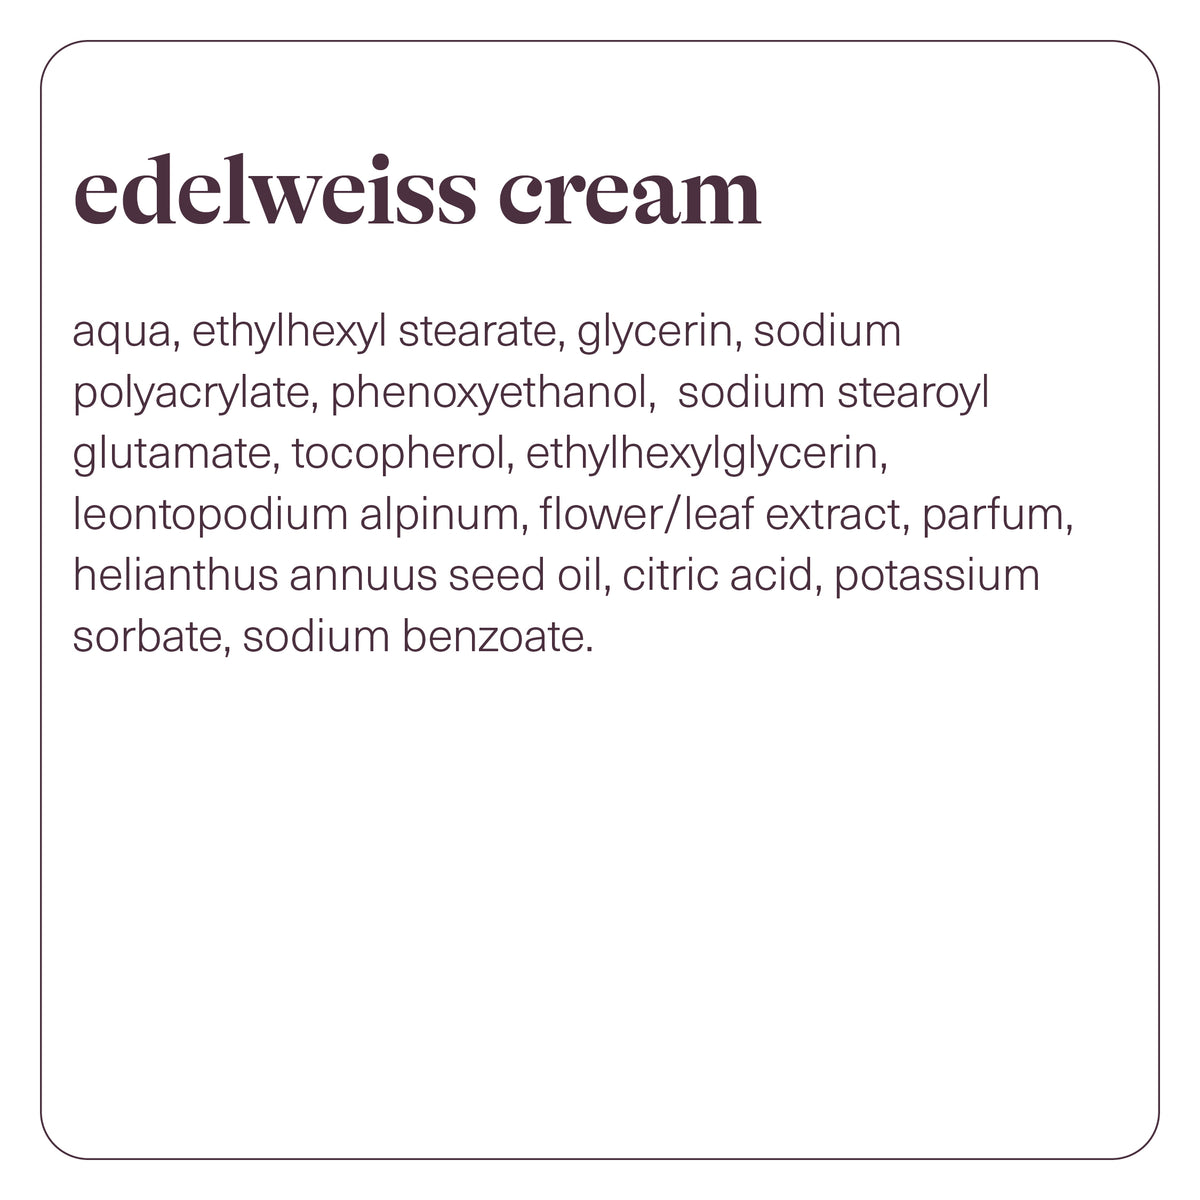 Edelweiss Cream